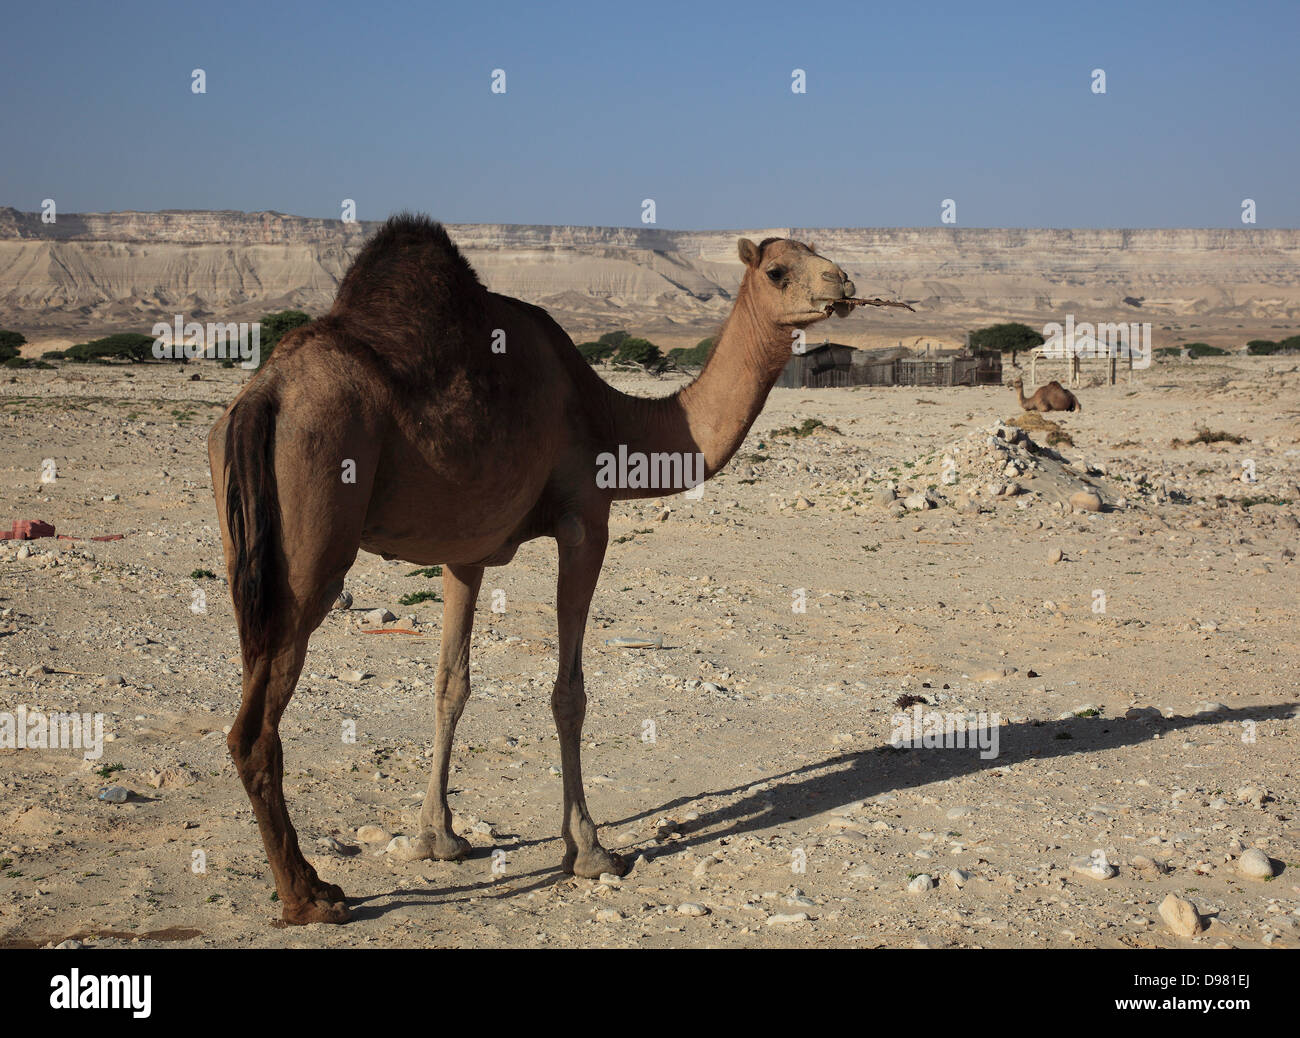 Camel in the desert, Oman Stock Photo